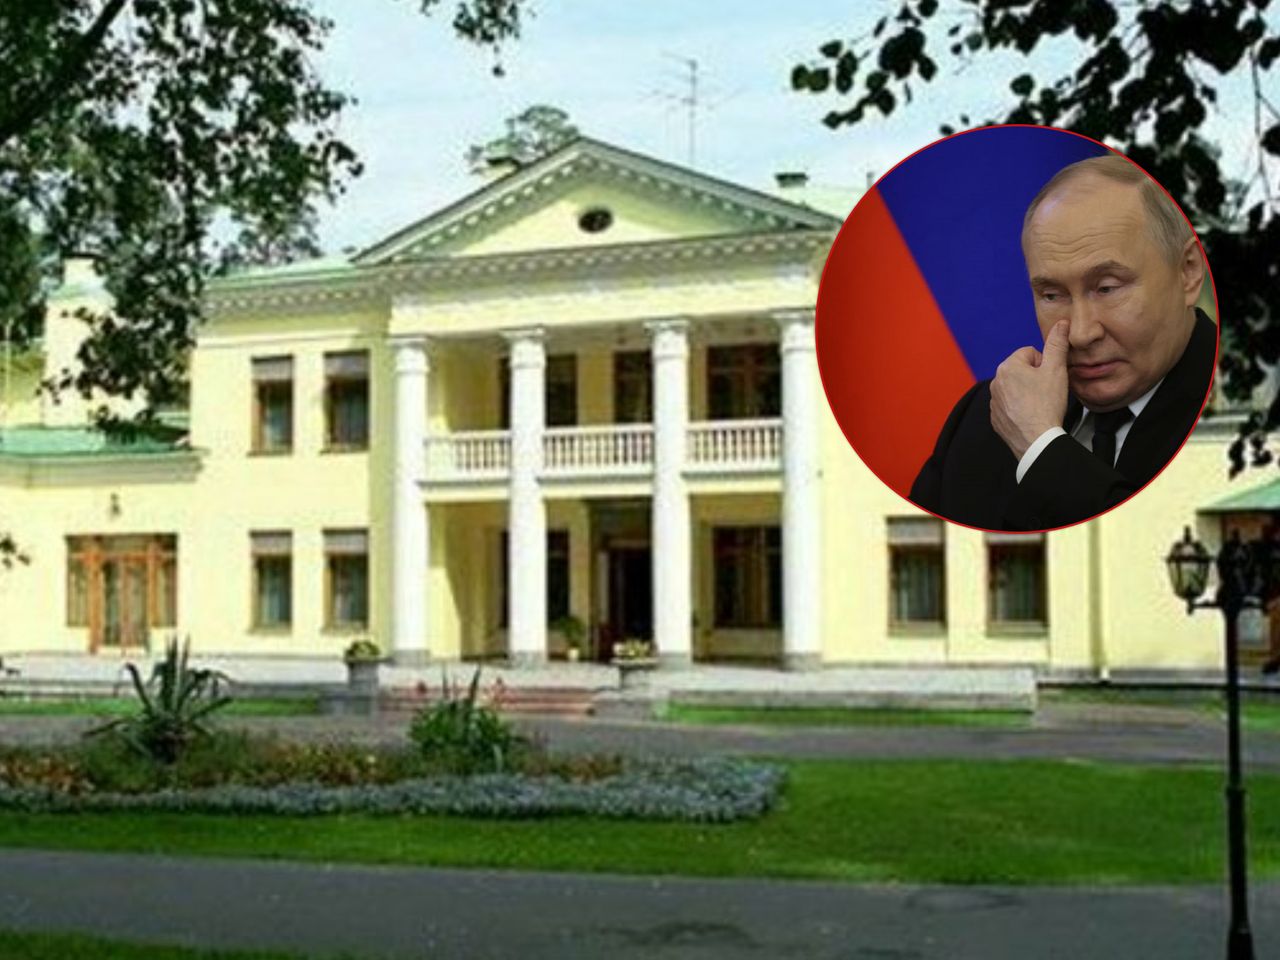 Putin's secretive residence exposed in embezzlement scandal